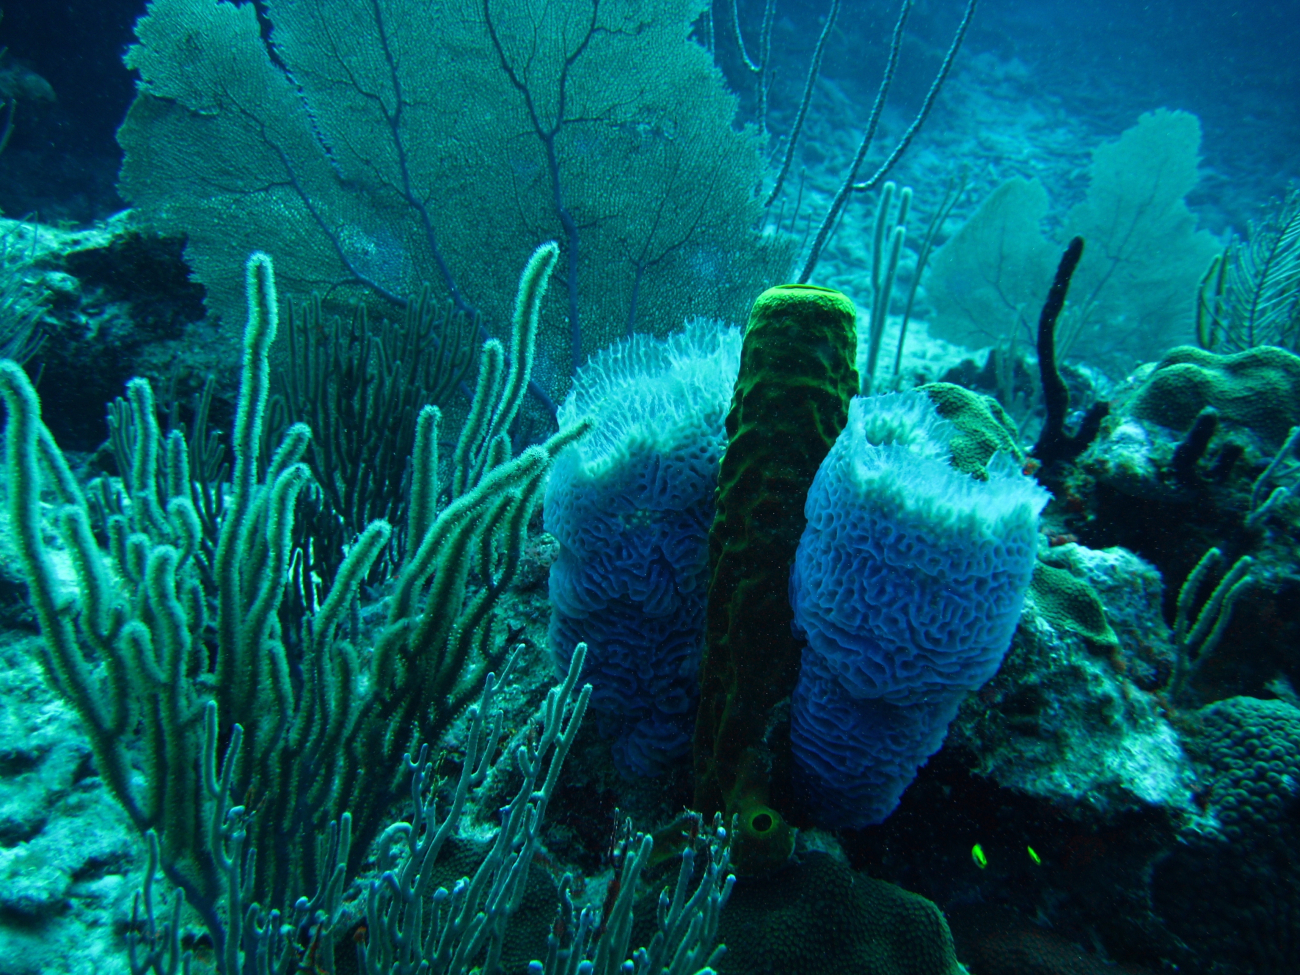 Sea fans, sea plumes, sea rods, and sea whips  (Gorgonacea spp), and blue andyellow barrel/tube sponges (Porifera spp)